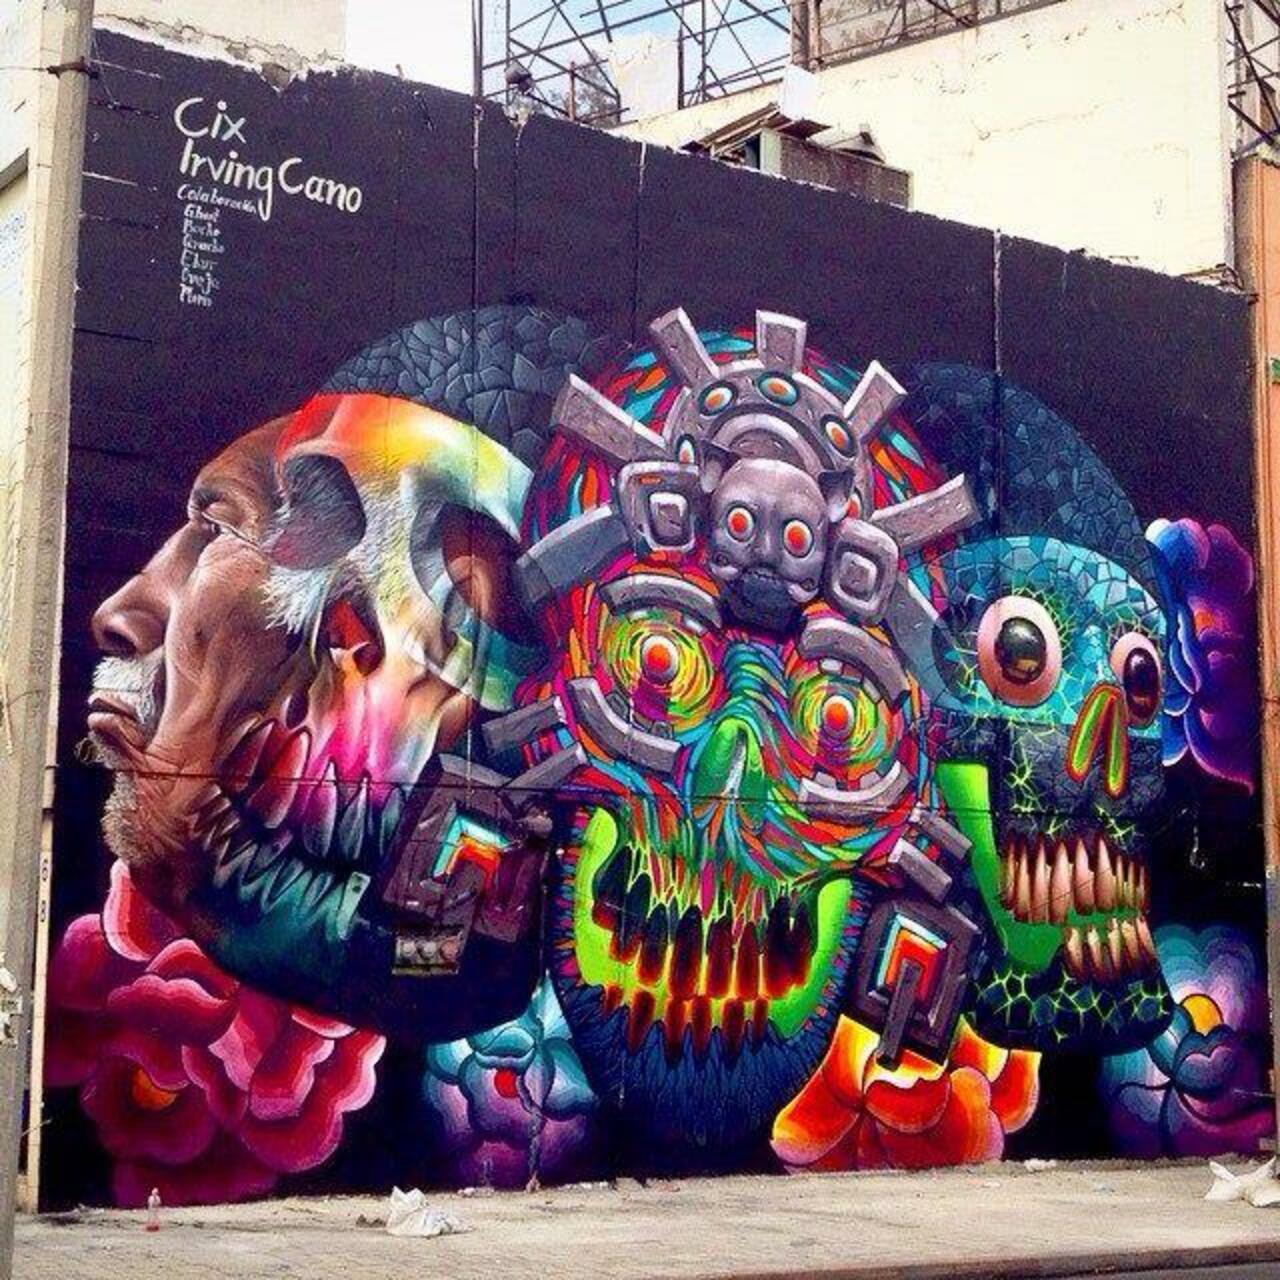 RT ArchaicManor "New Street Art by Irving Cano and Cix in México.

#art #arte #graffiti #streetart http://t.co/W13xOQgJ10 yo"